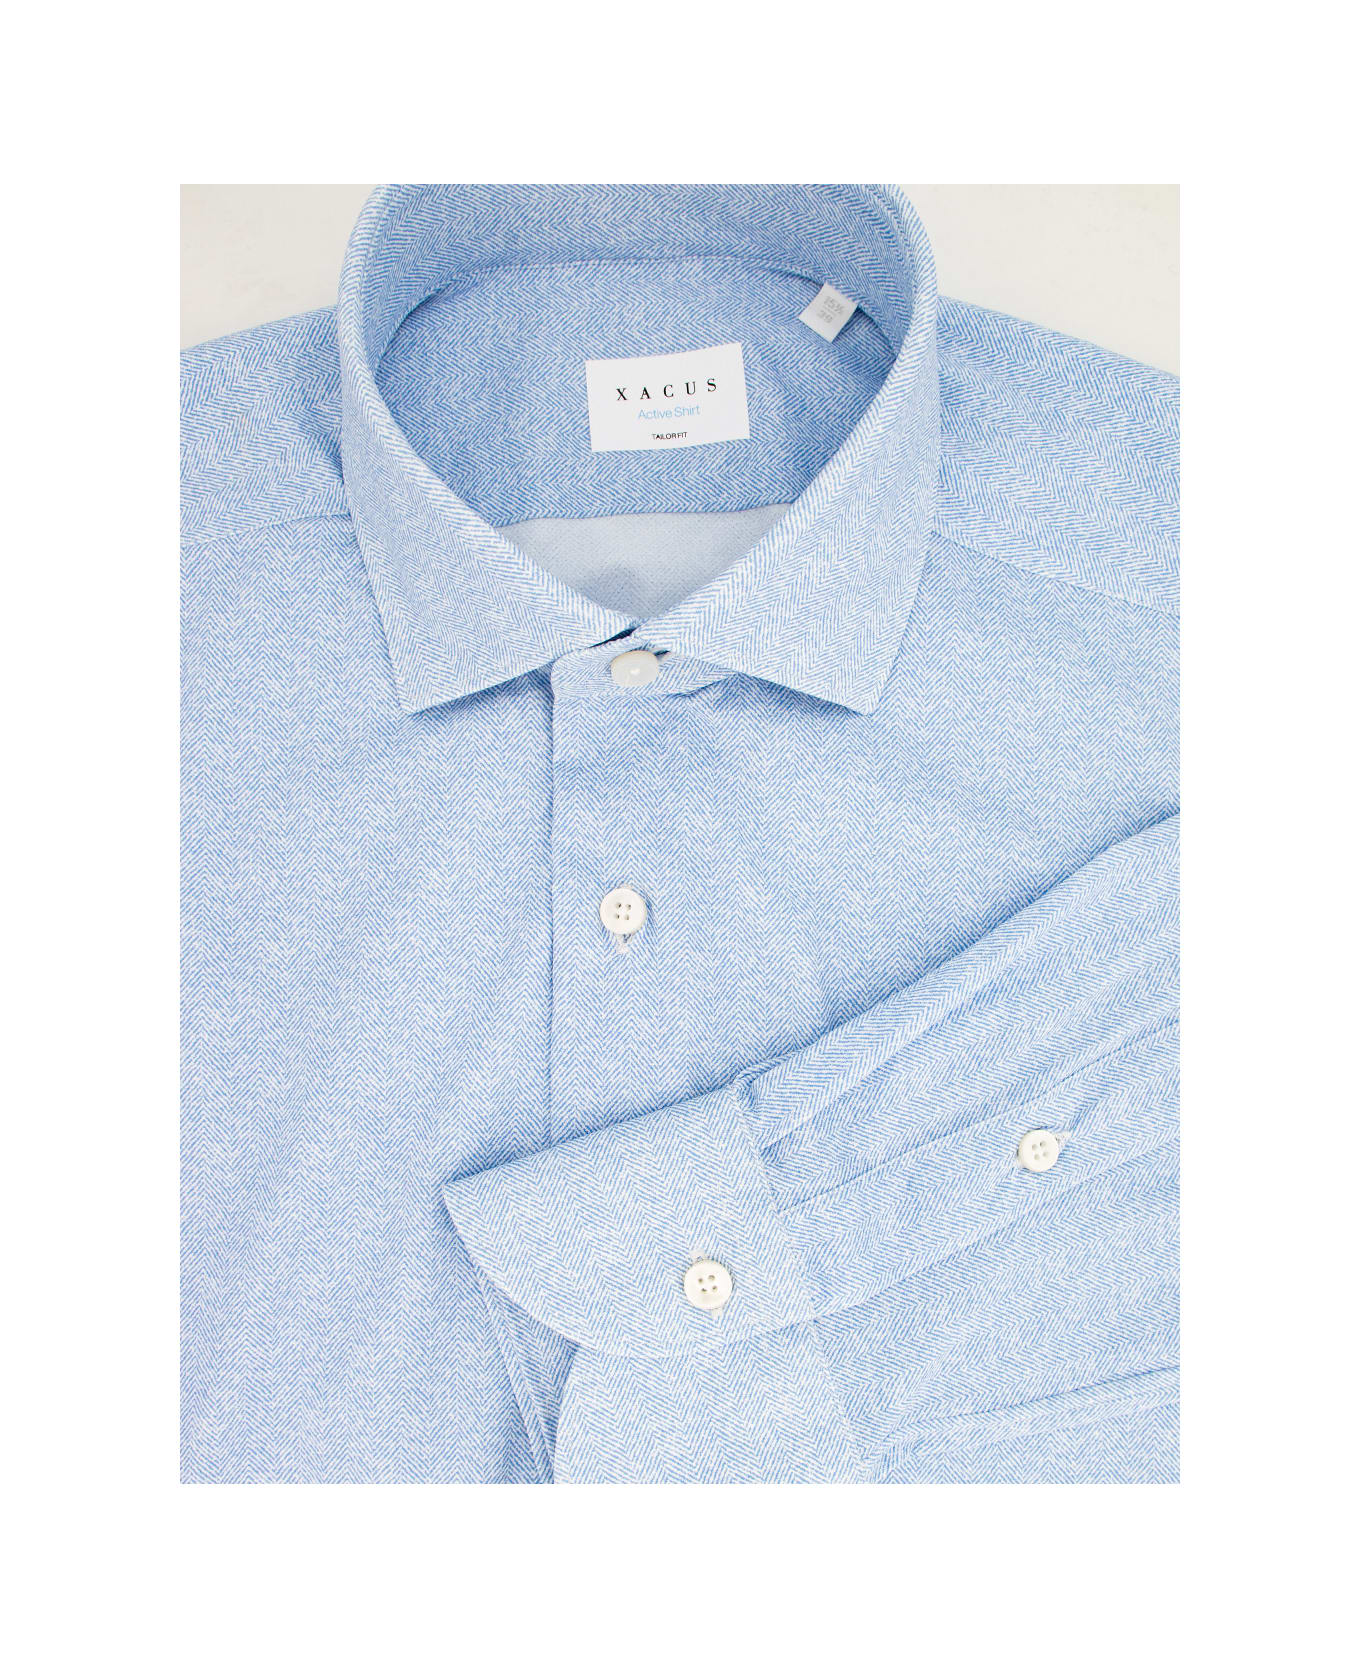 Xacus Shirt - BLUE MELANGE